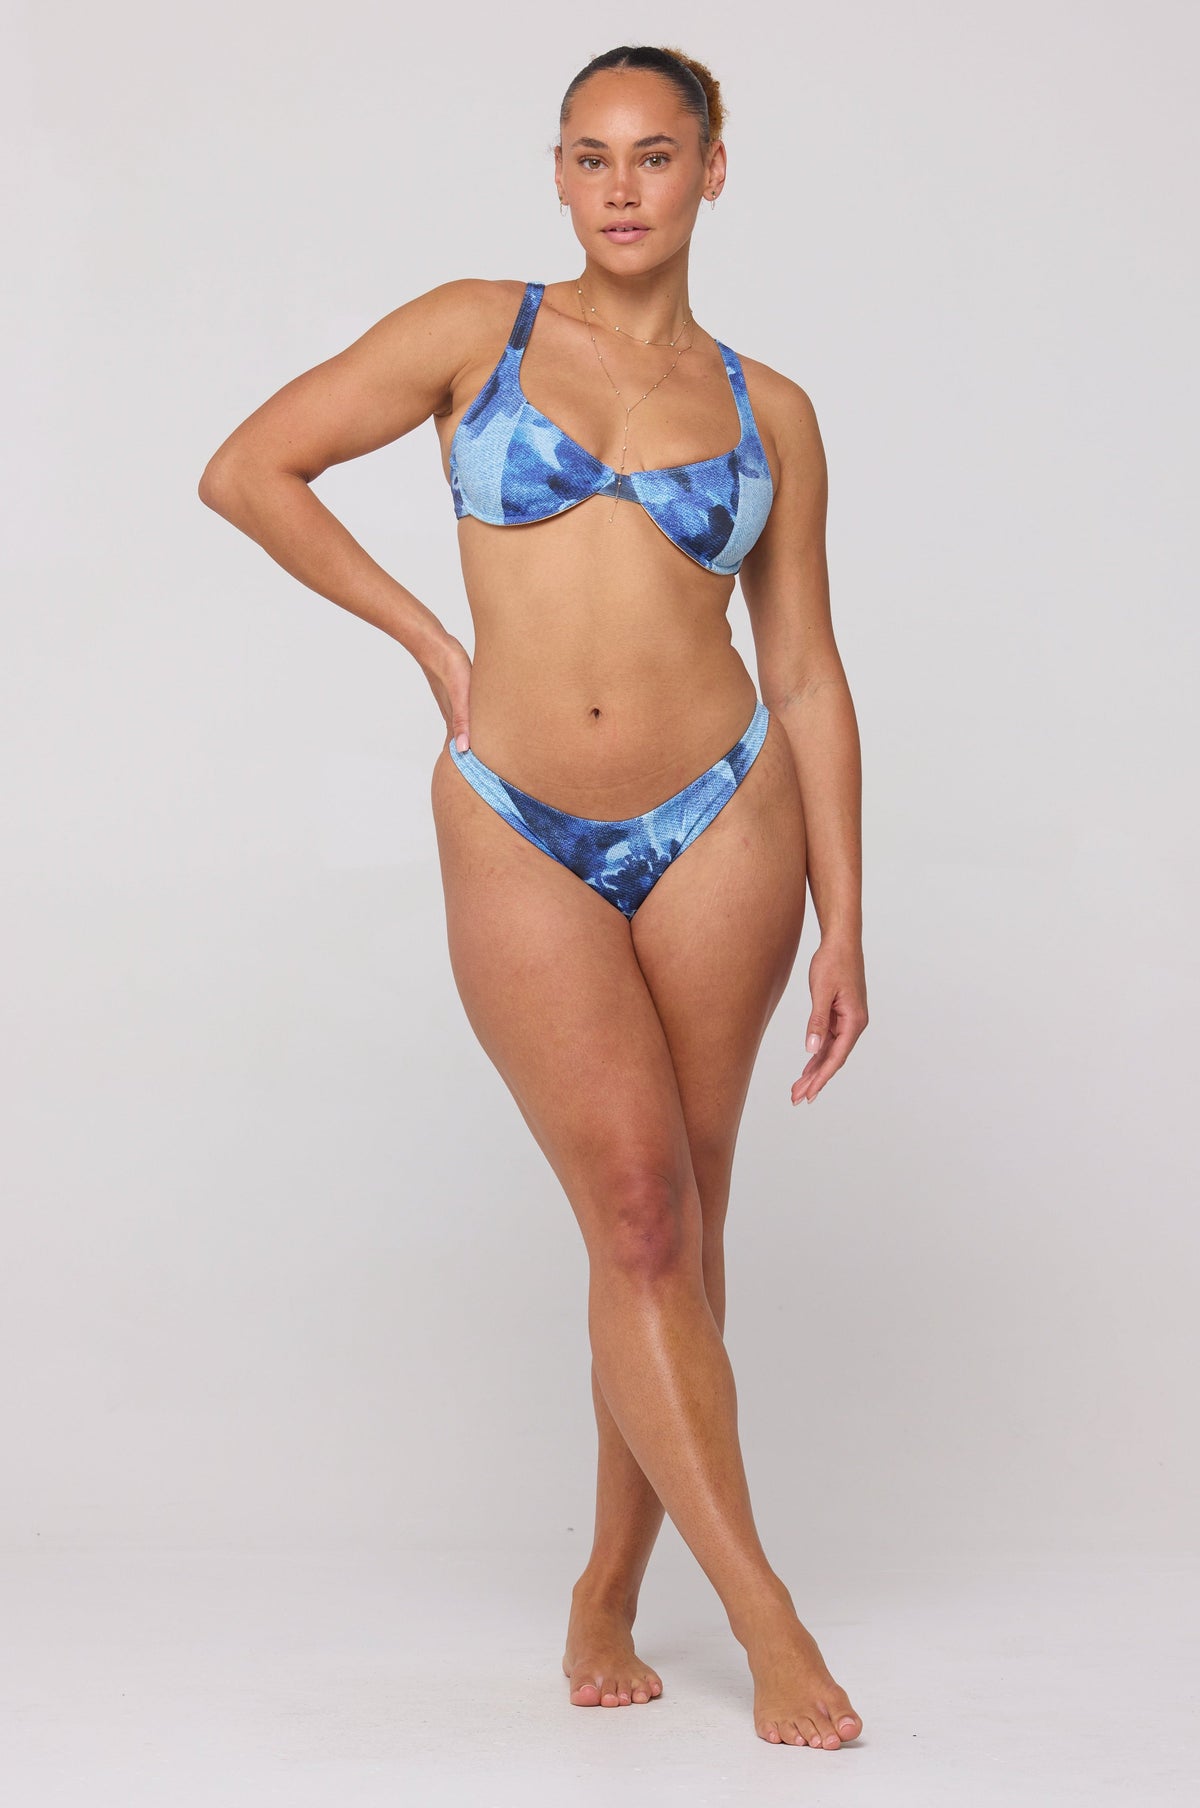 This is an image of Matty Bikini Top in Indigo - RESA featuring a model wearing the dress